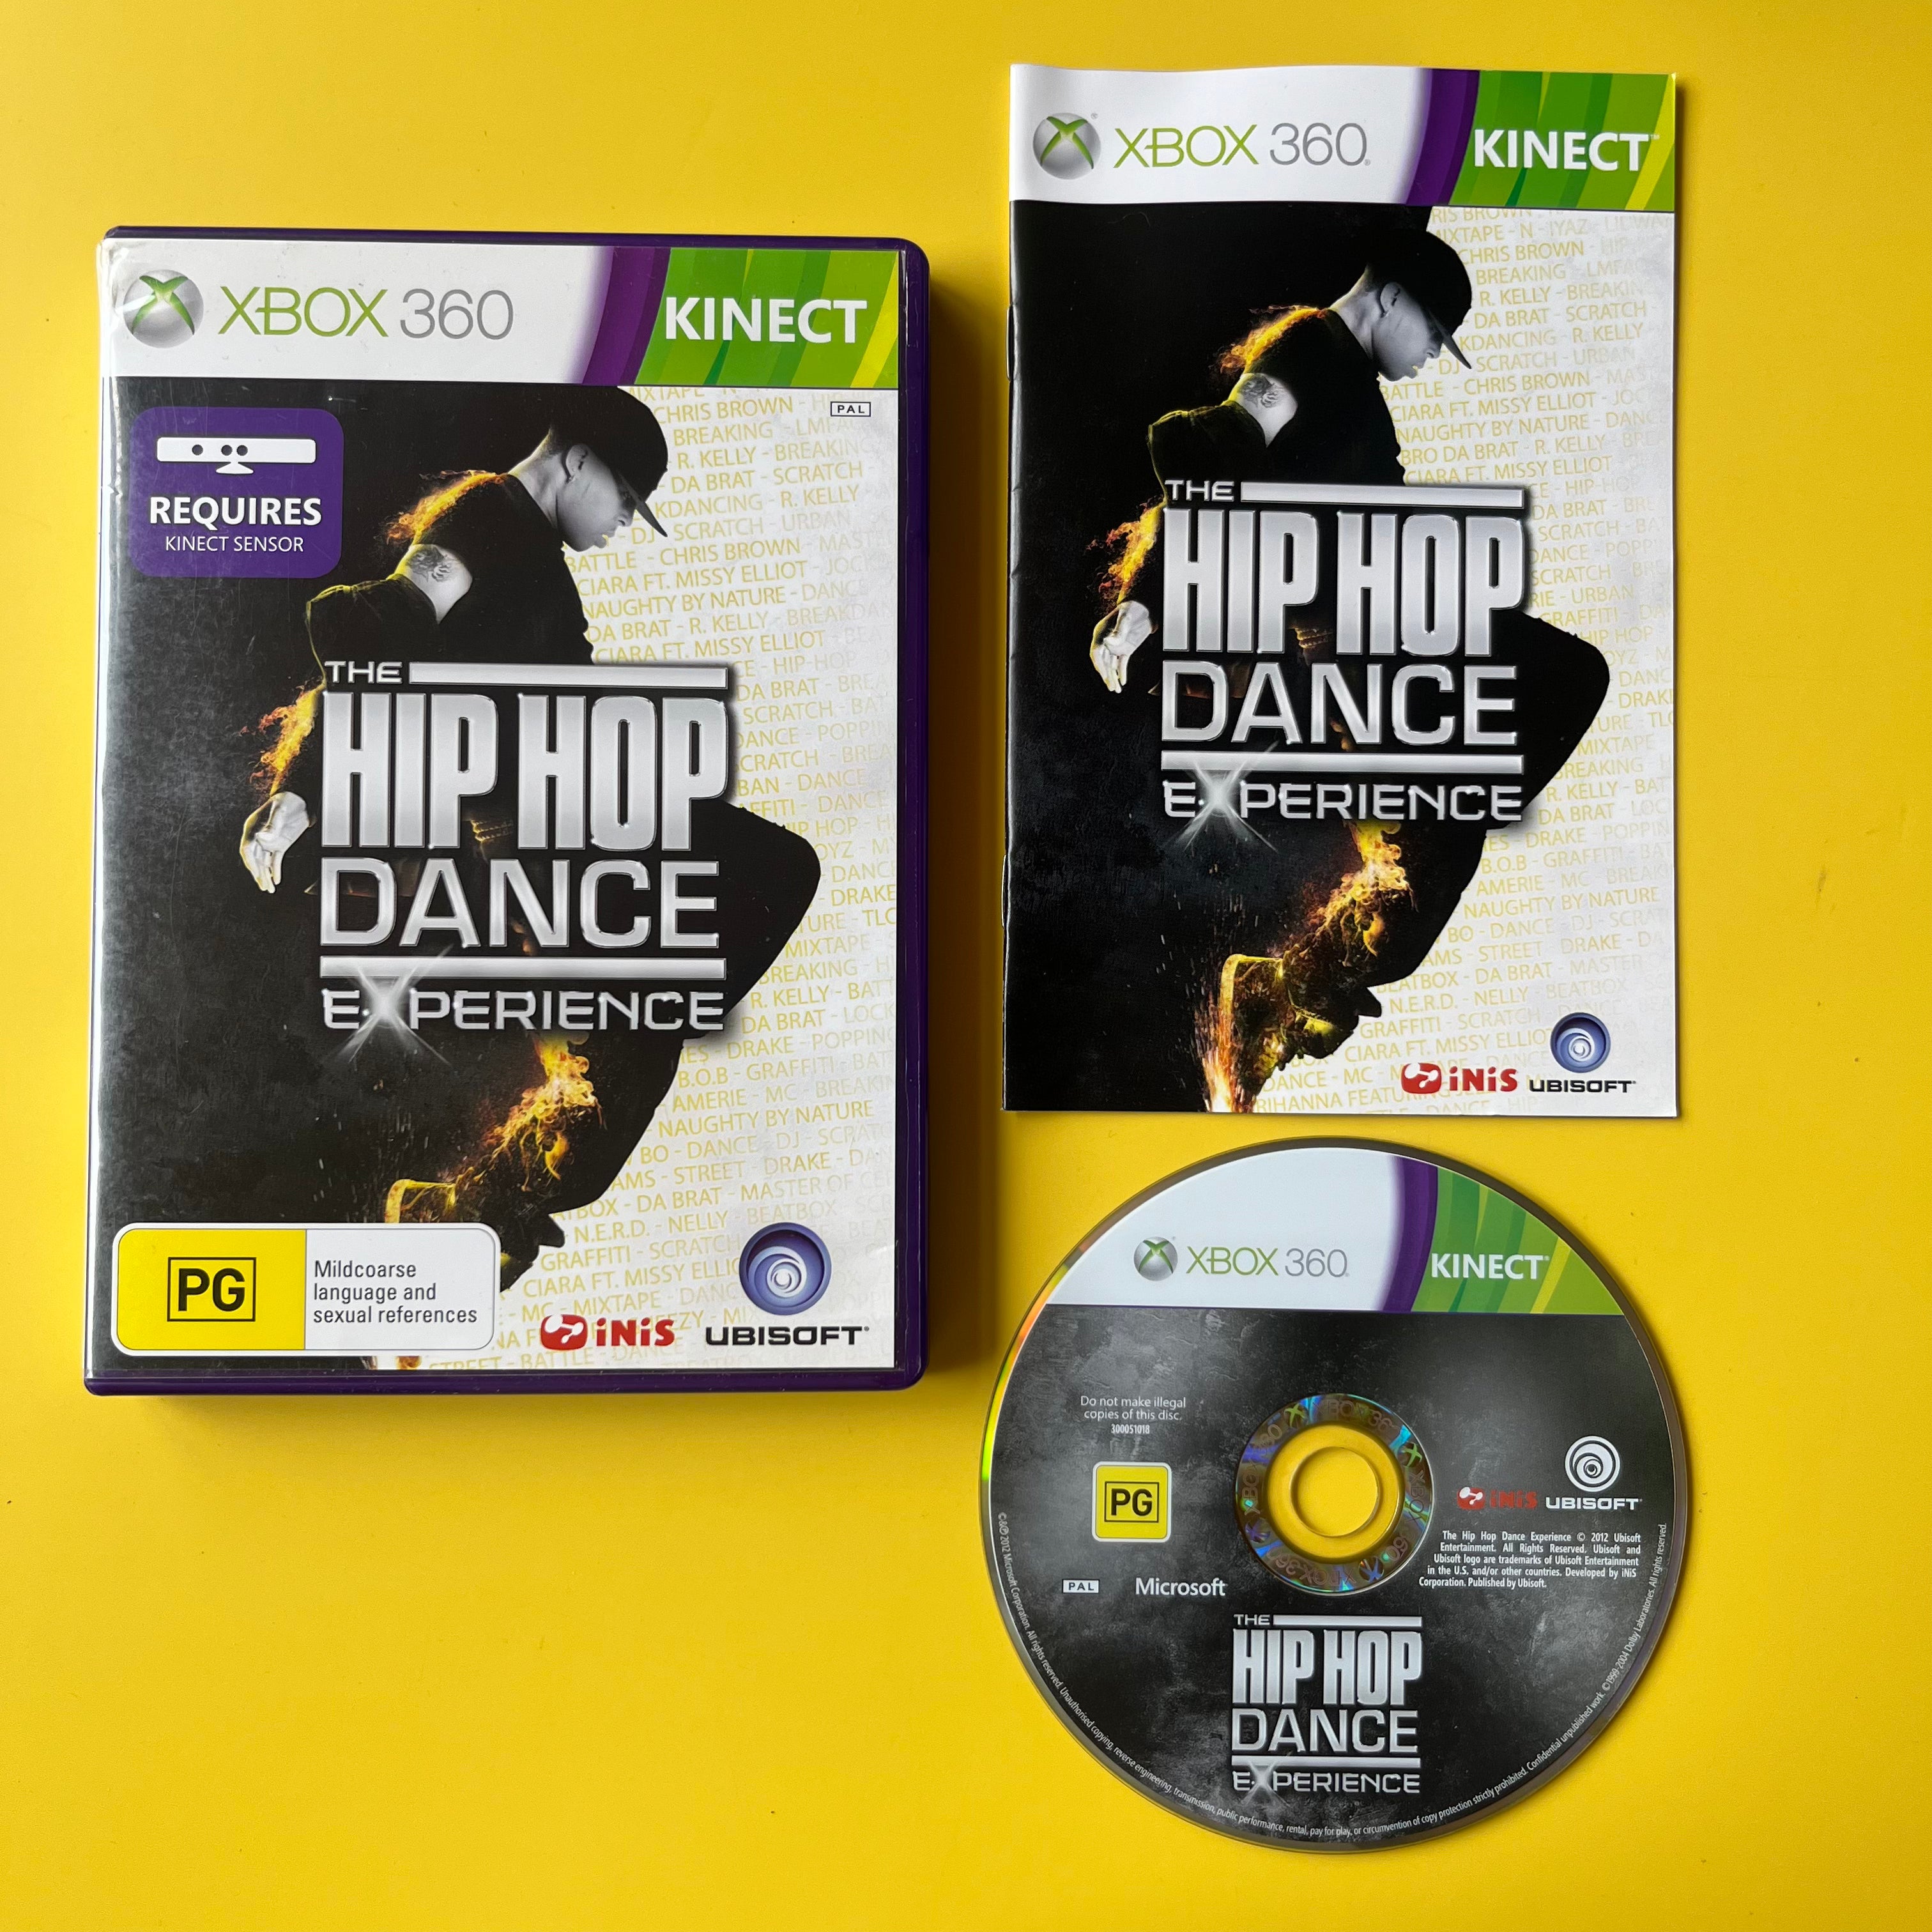 Xbox 360 - The Hip Hop Dance Experience